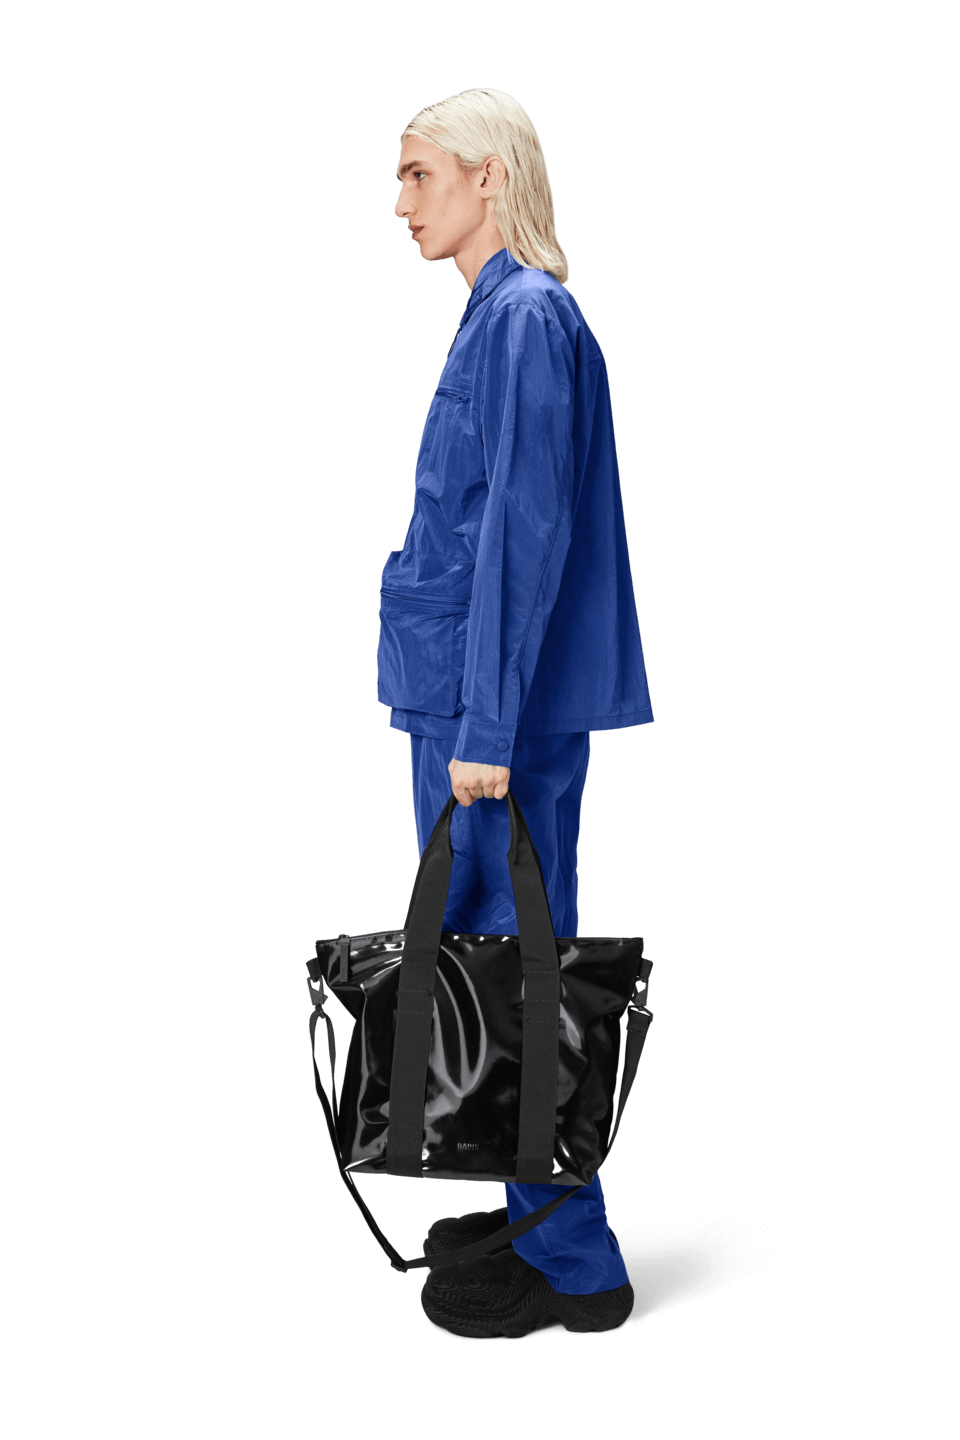 Tote Bag Mini W3 | Night | Waterproof | by Rains - Lifestory